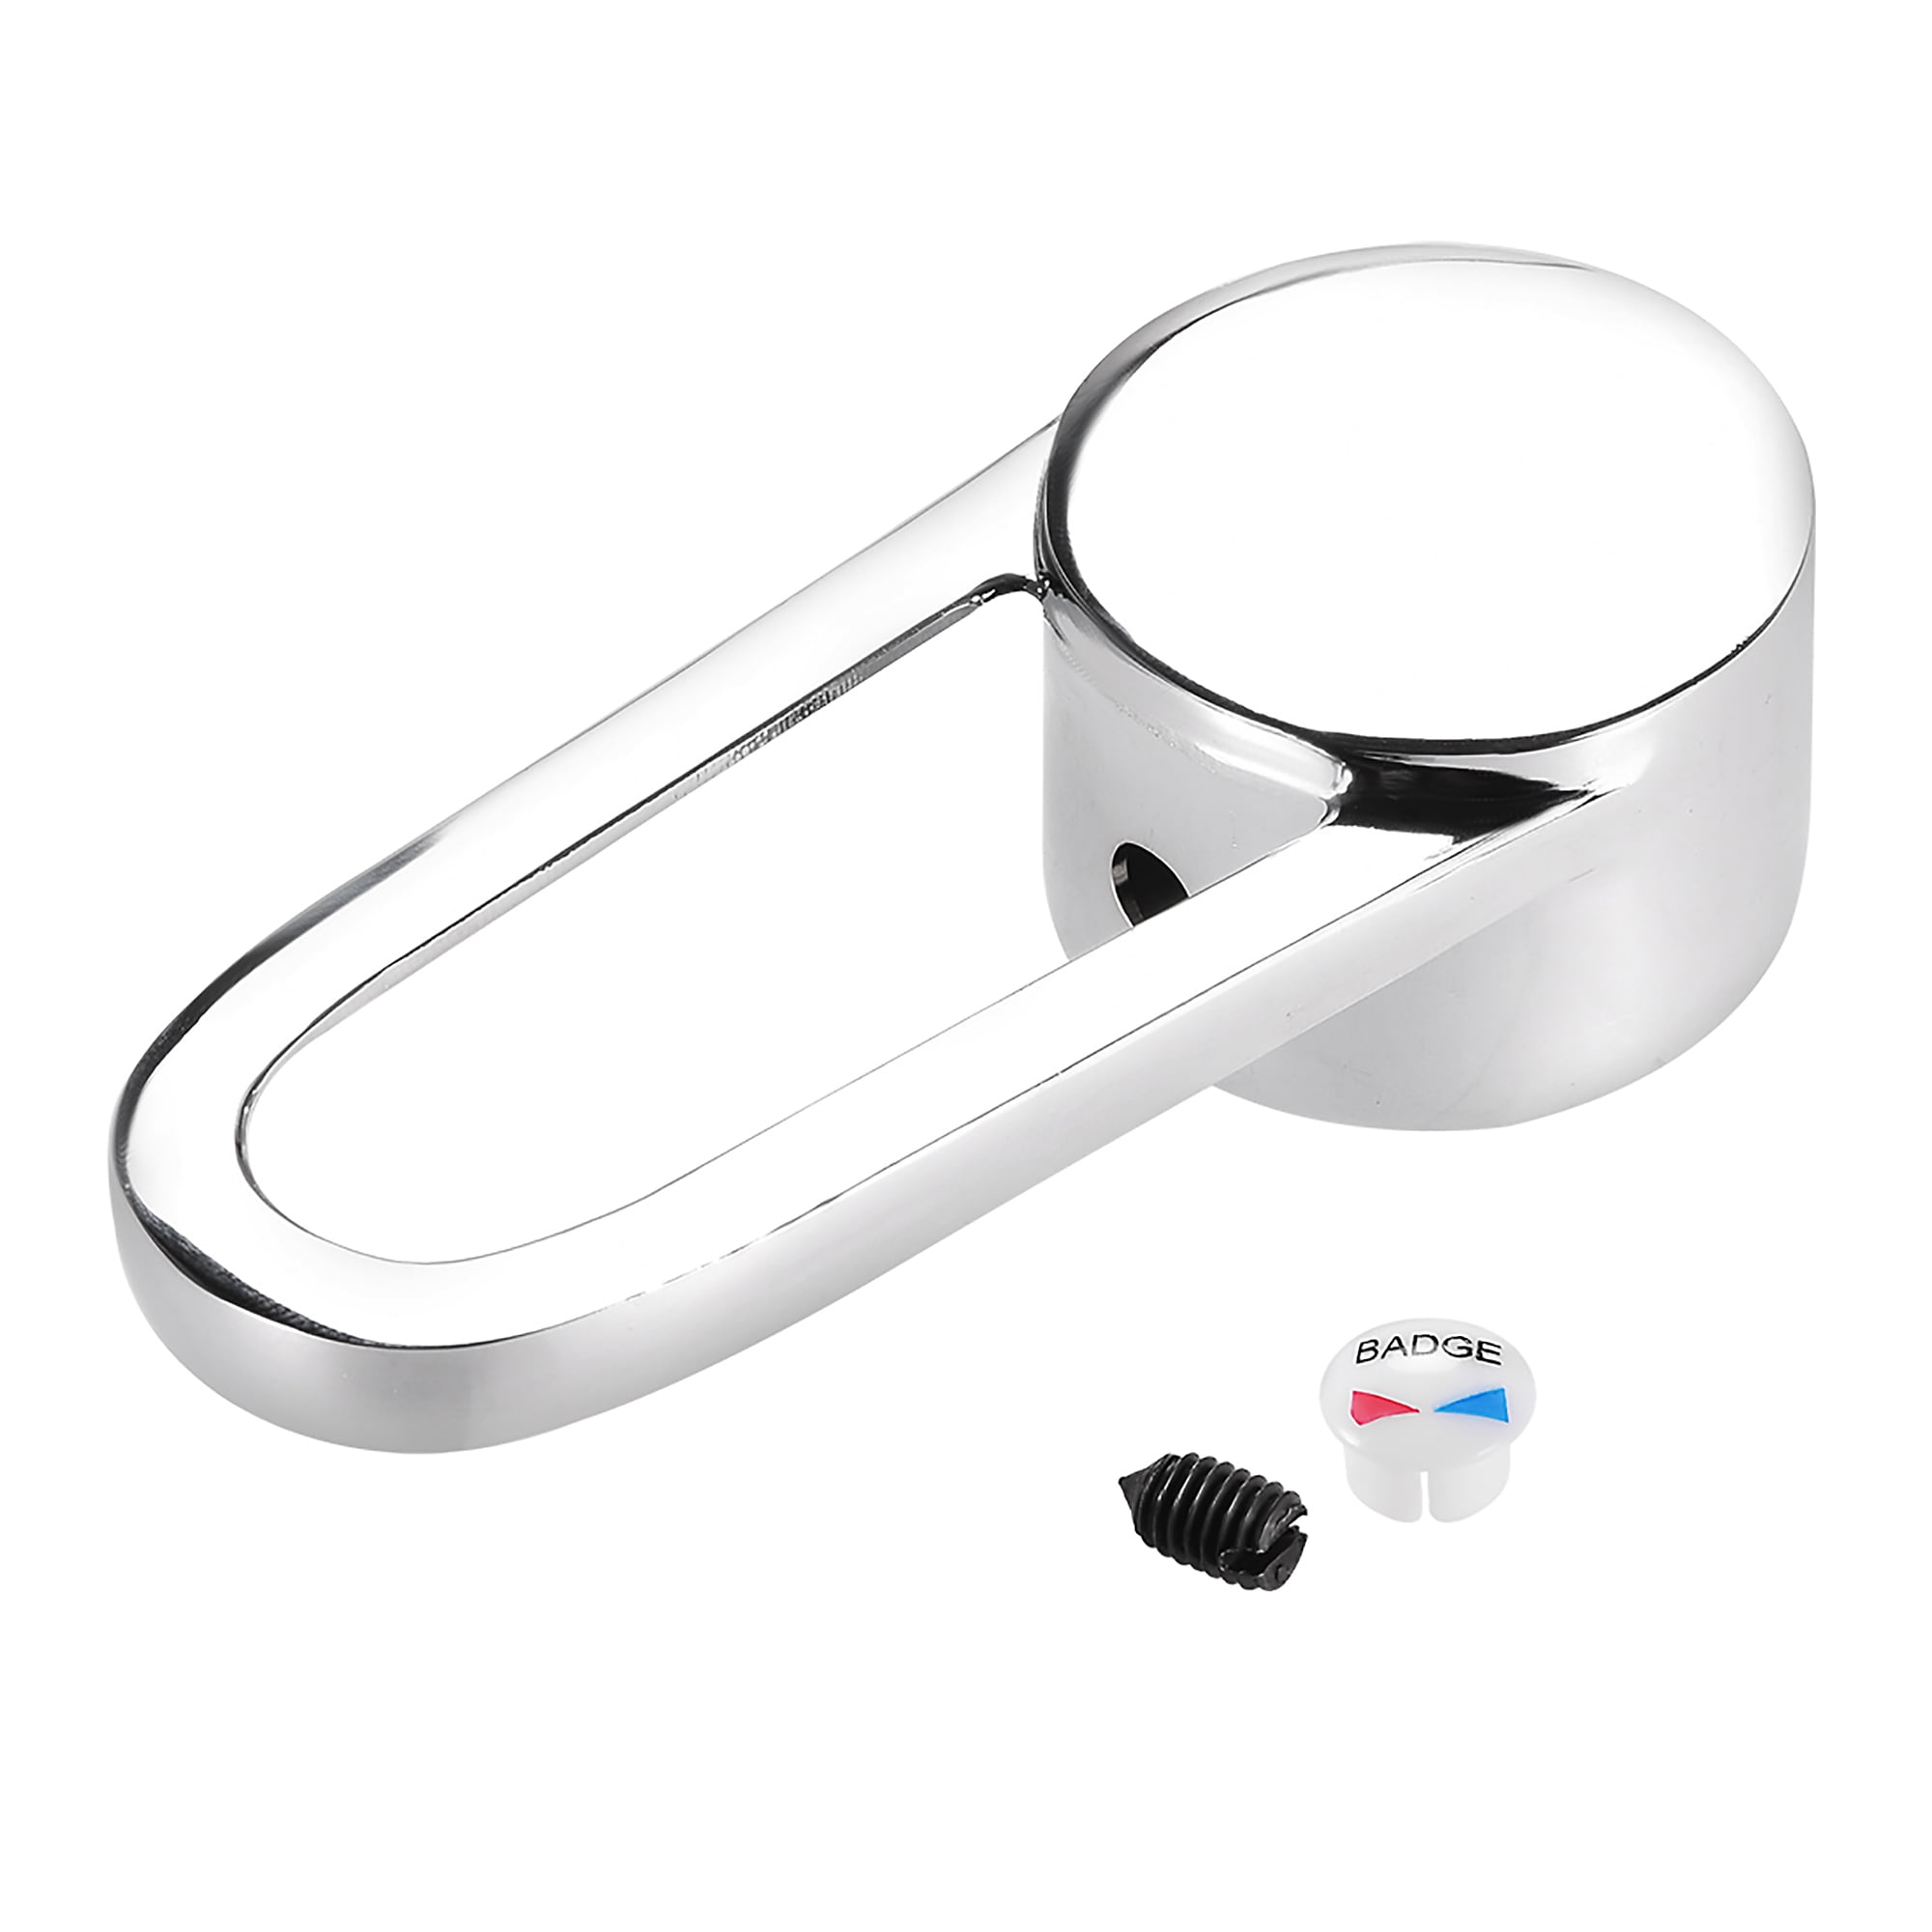 Eastar 40mm Zinc Alloy Kitchen Bathrooms Mixer Tap Handle Lever Replacement Silver